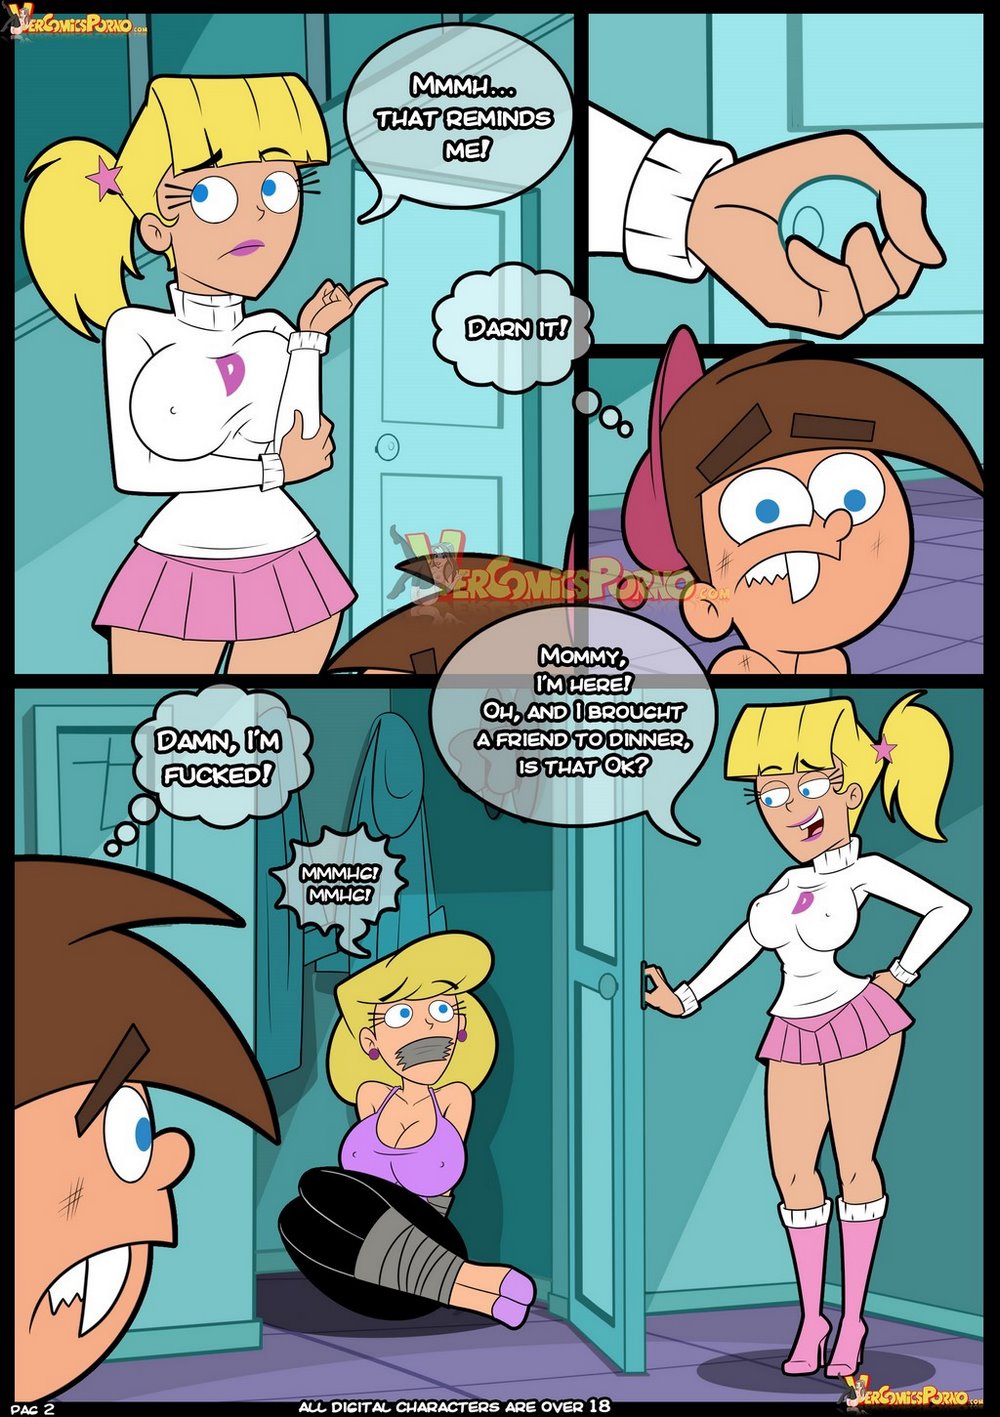 Cartoon Fairly Oddparents Veronica - The Fairly OddParents Breaking Da Rules! 6 â€“ Croc - Comics Army